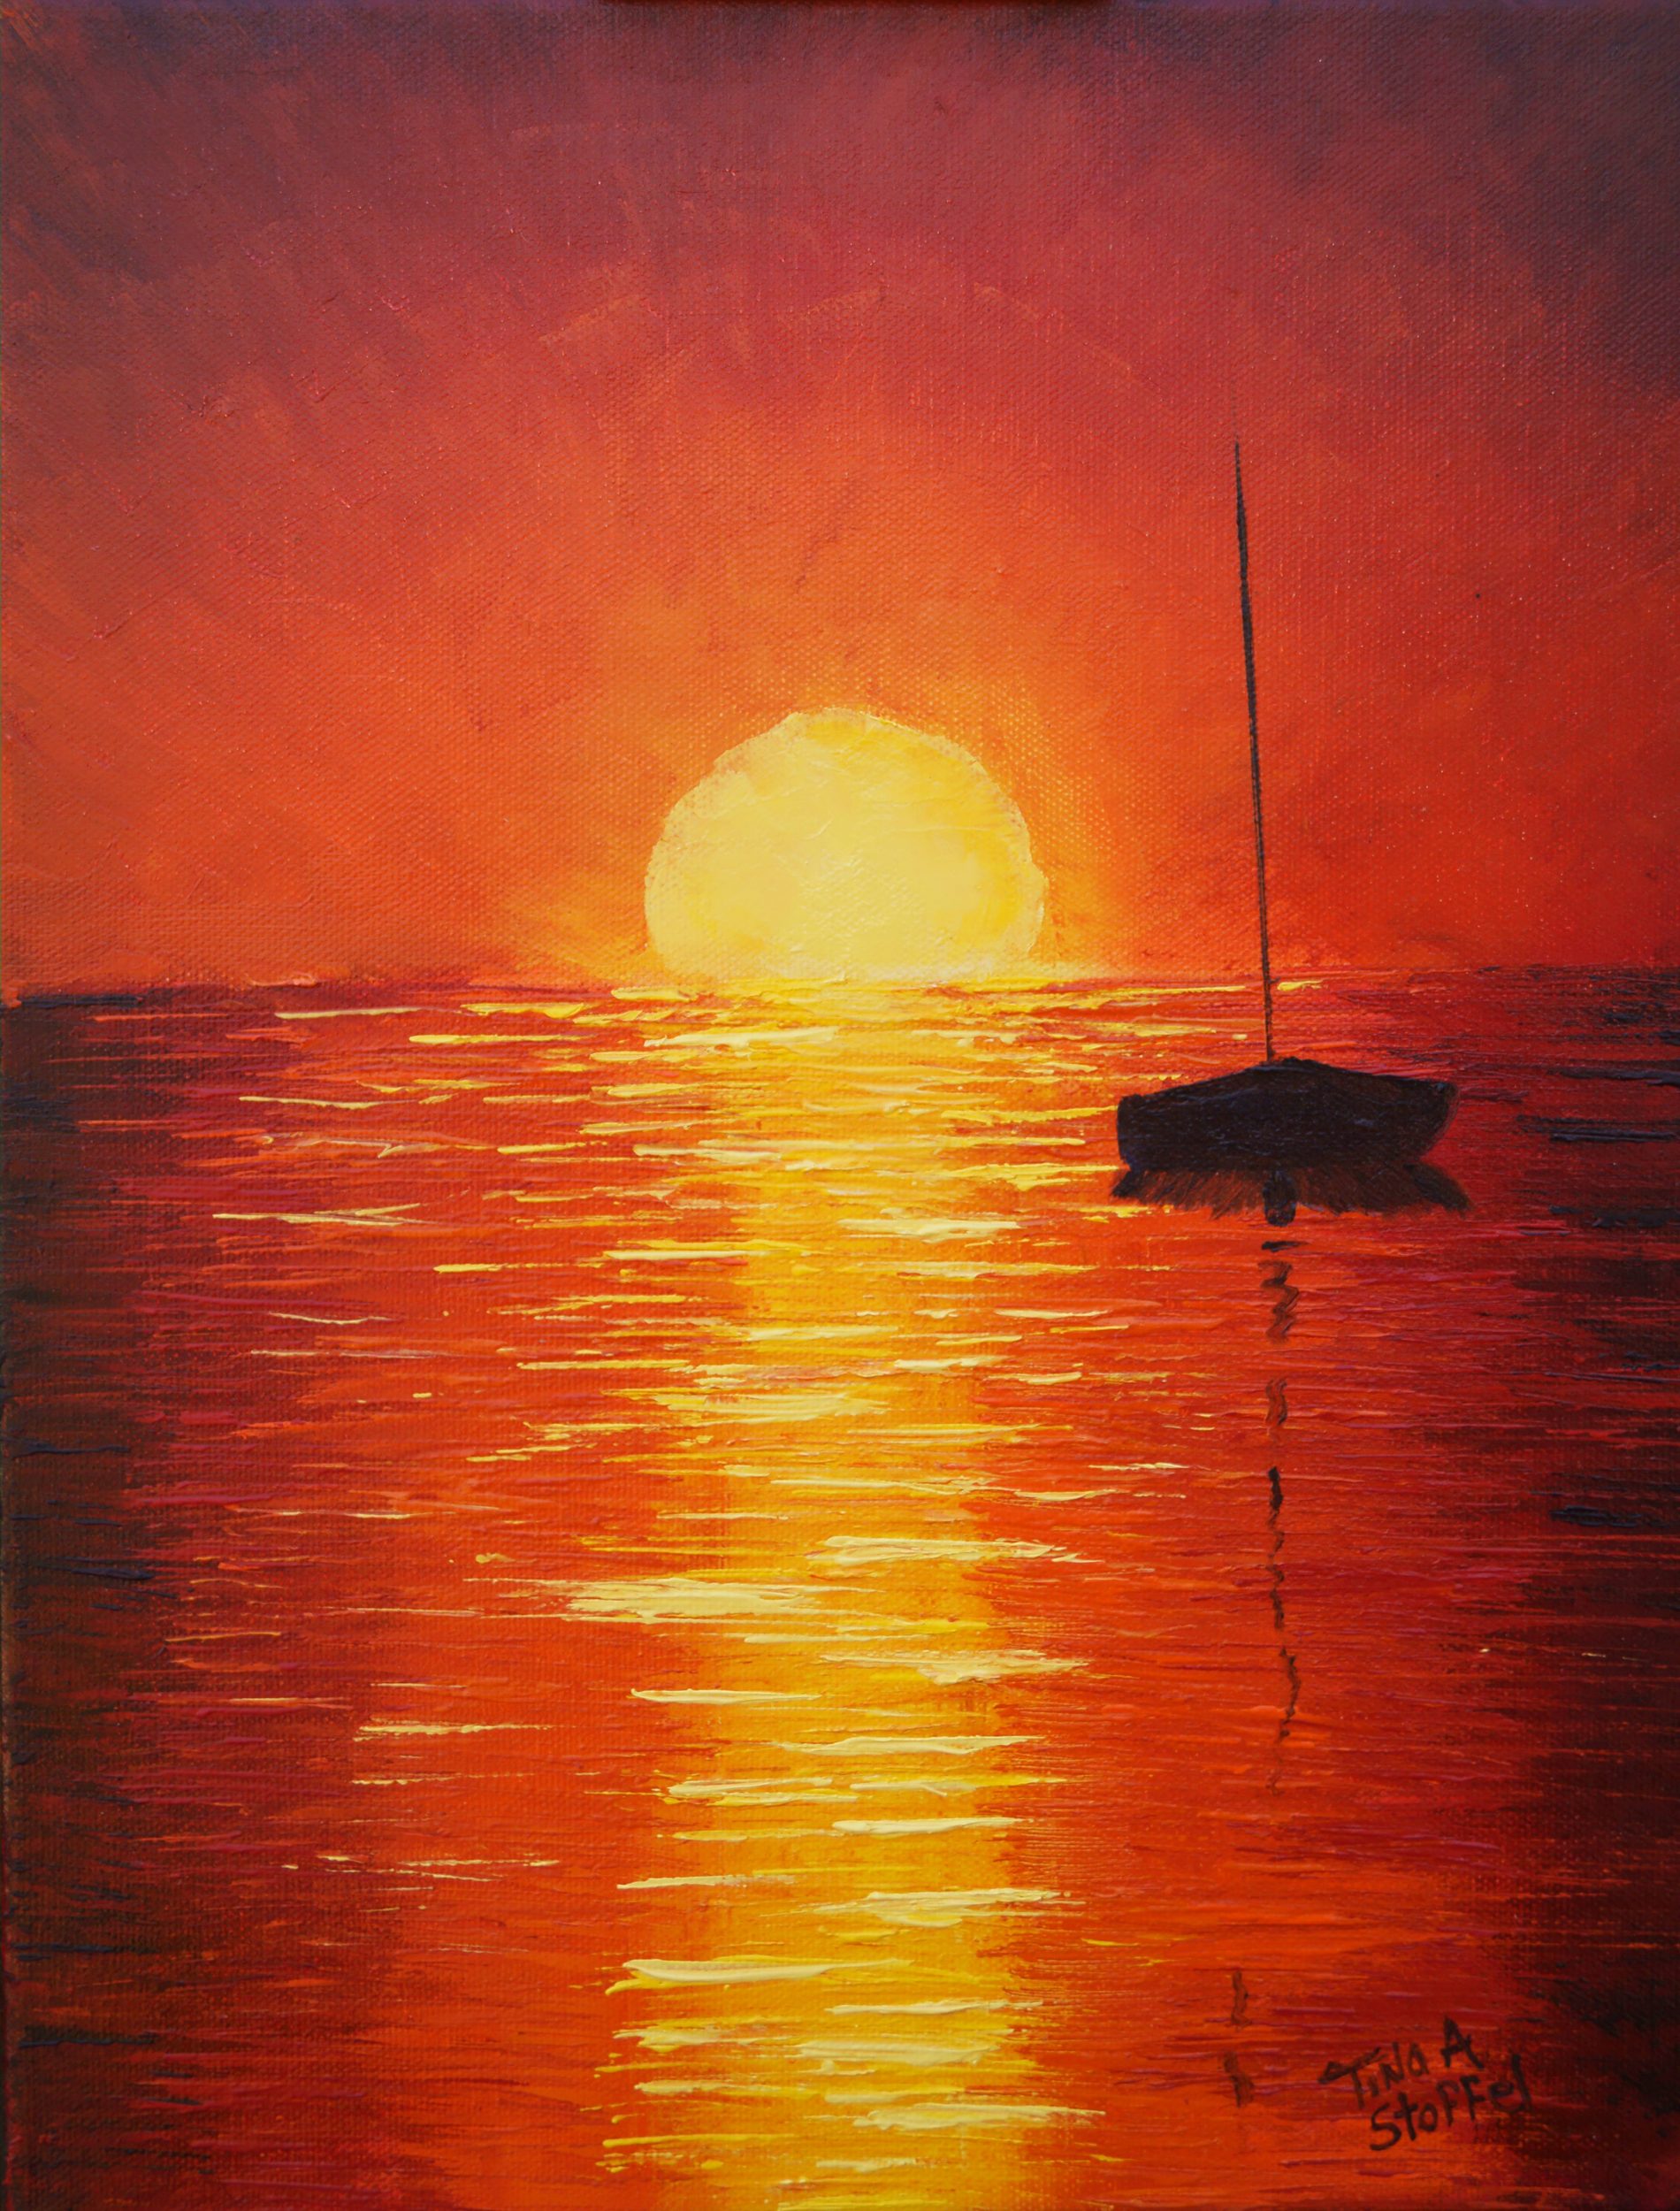 paintings of sailboats at sunset